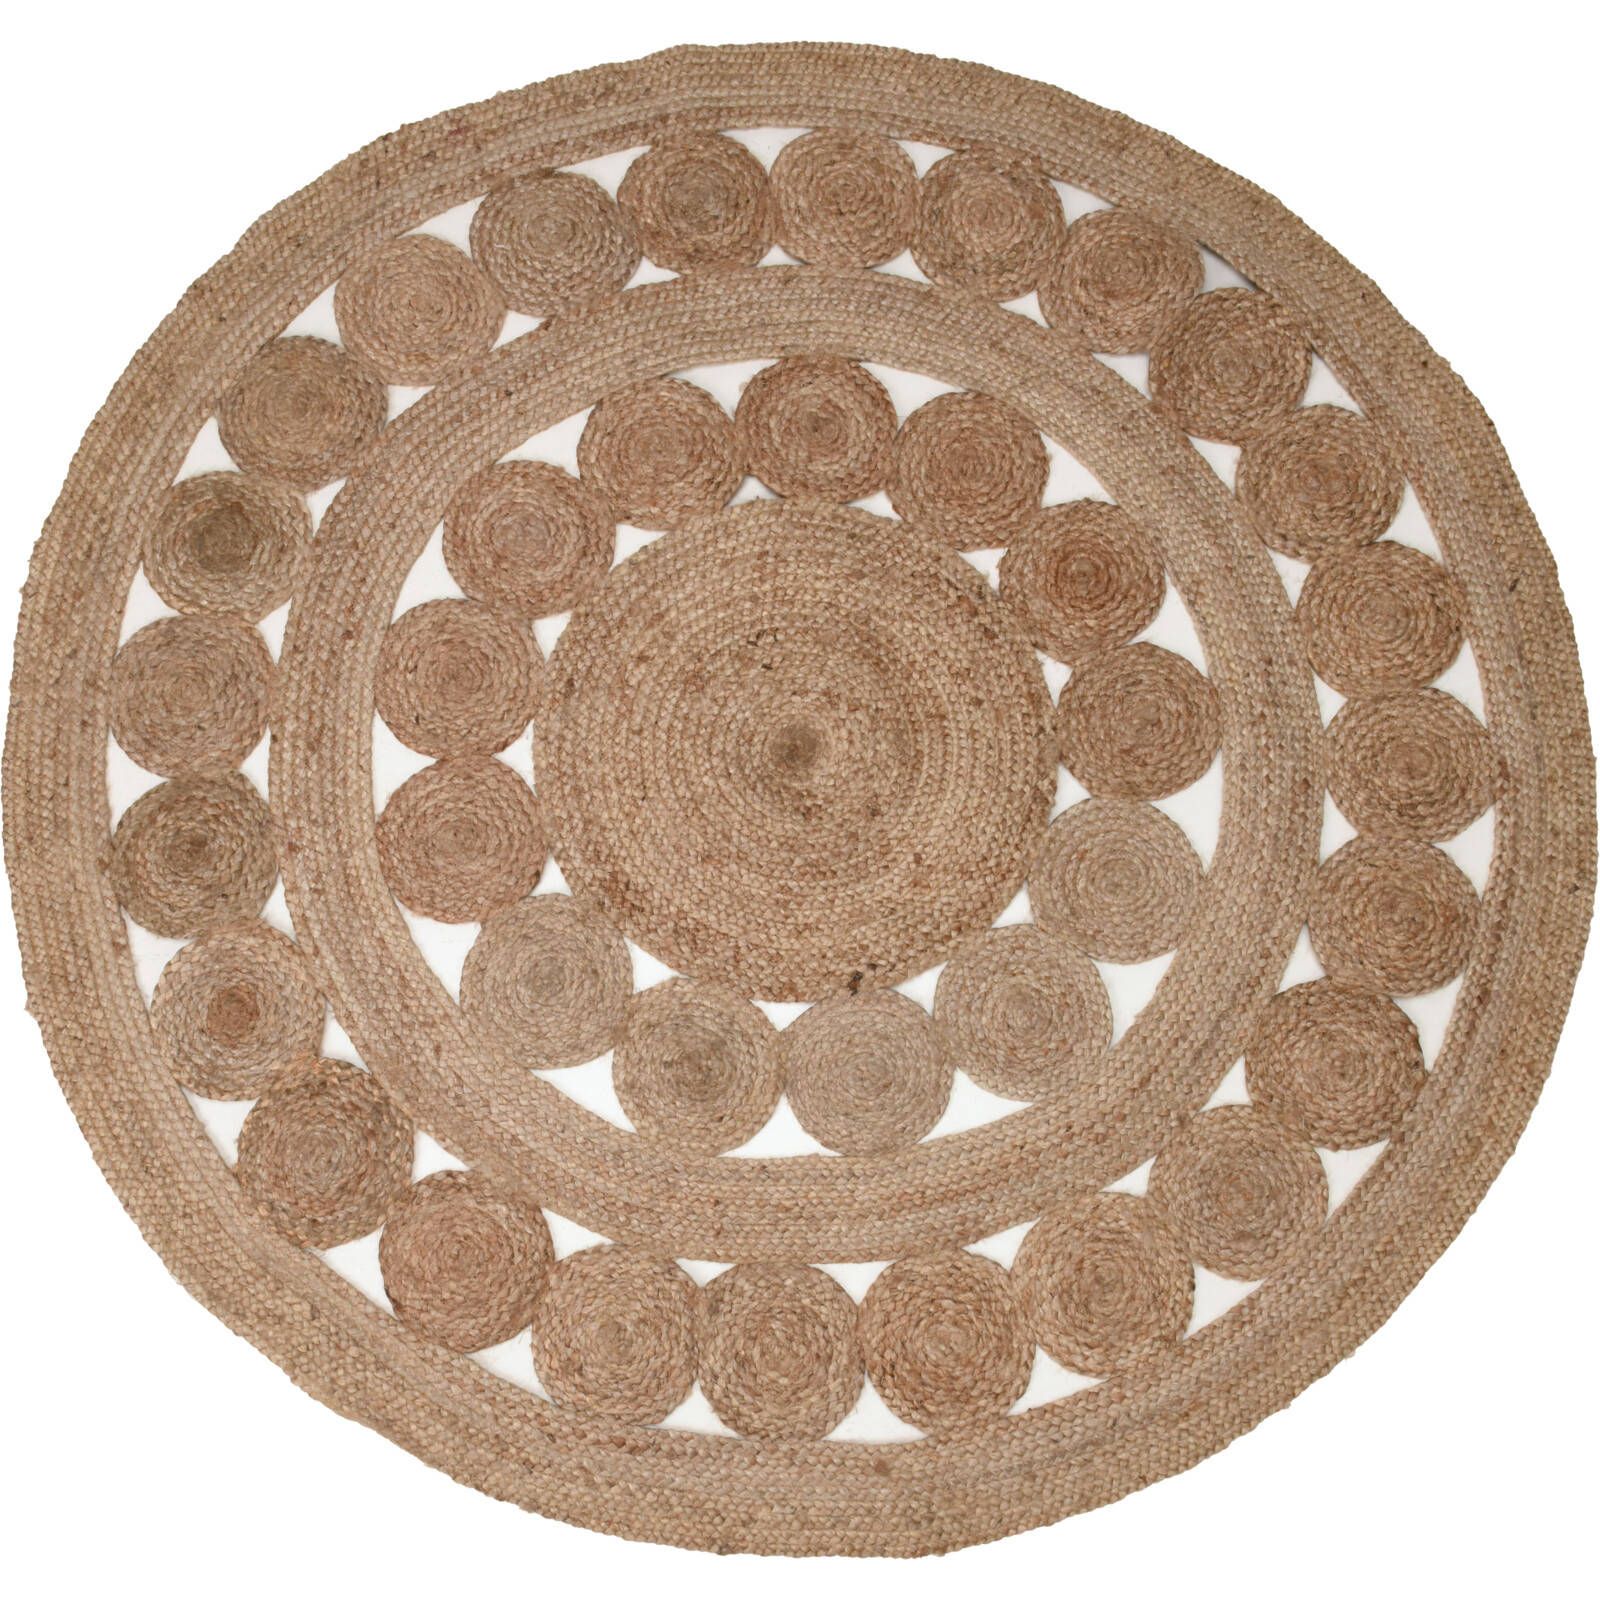 Home Styling Collection Jutový koberec, 150 cm - EDAXO.CZ s.r.o.